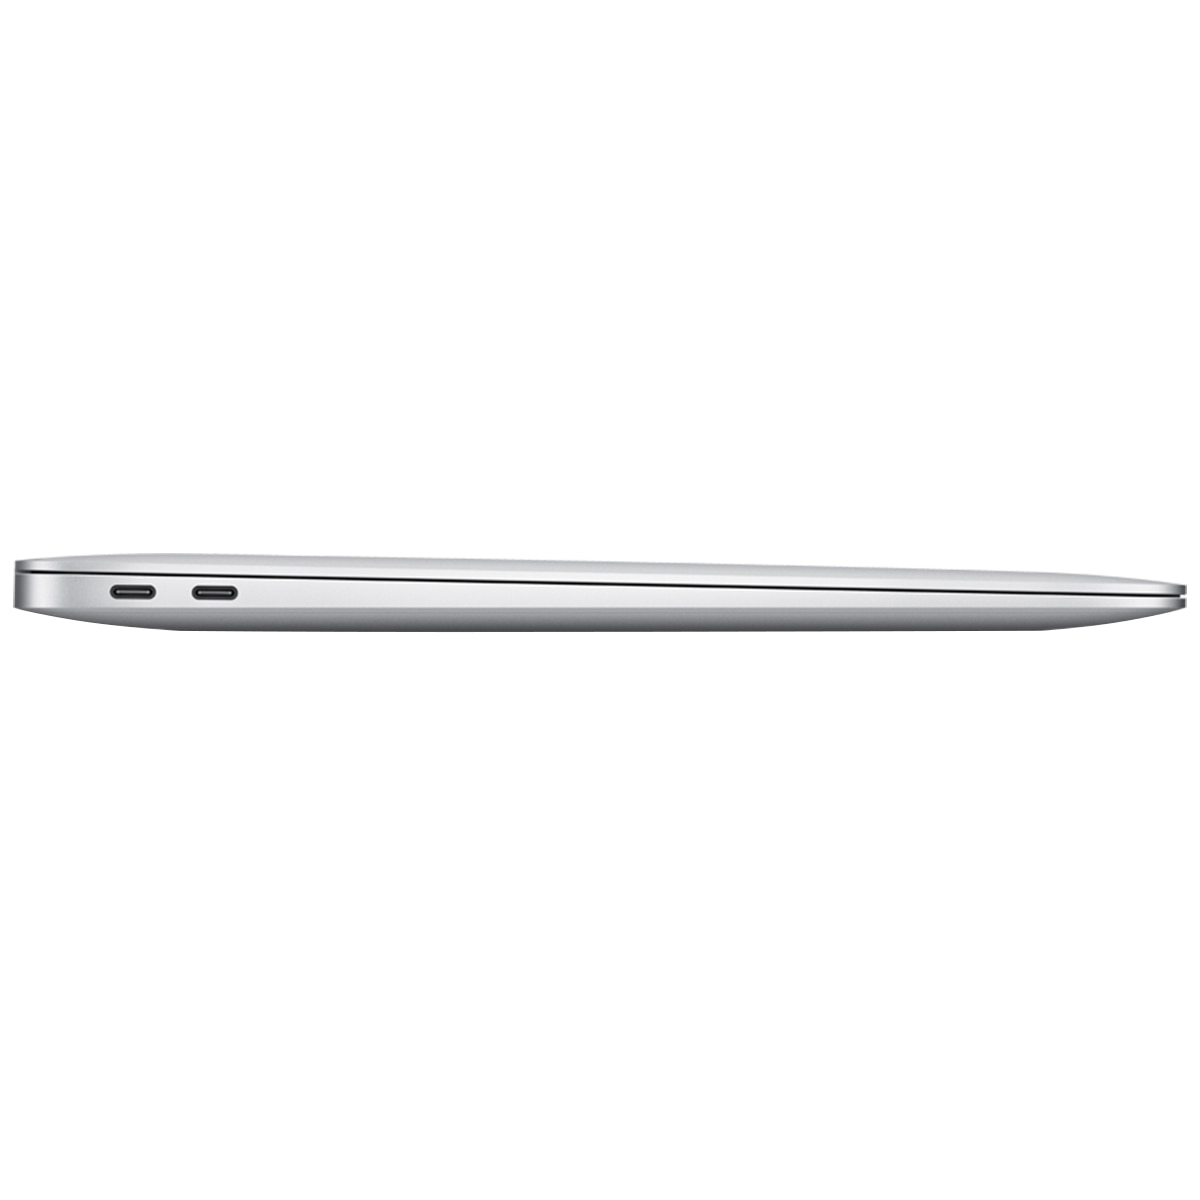 Macbook Air MVFH2X/A 13-inch MacBook Air: 1.6GHz dual-core 8th-generation Intel Core i5 processor, 128GB - Space Grey